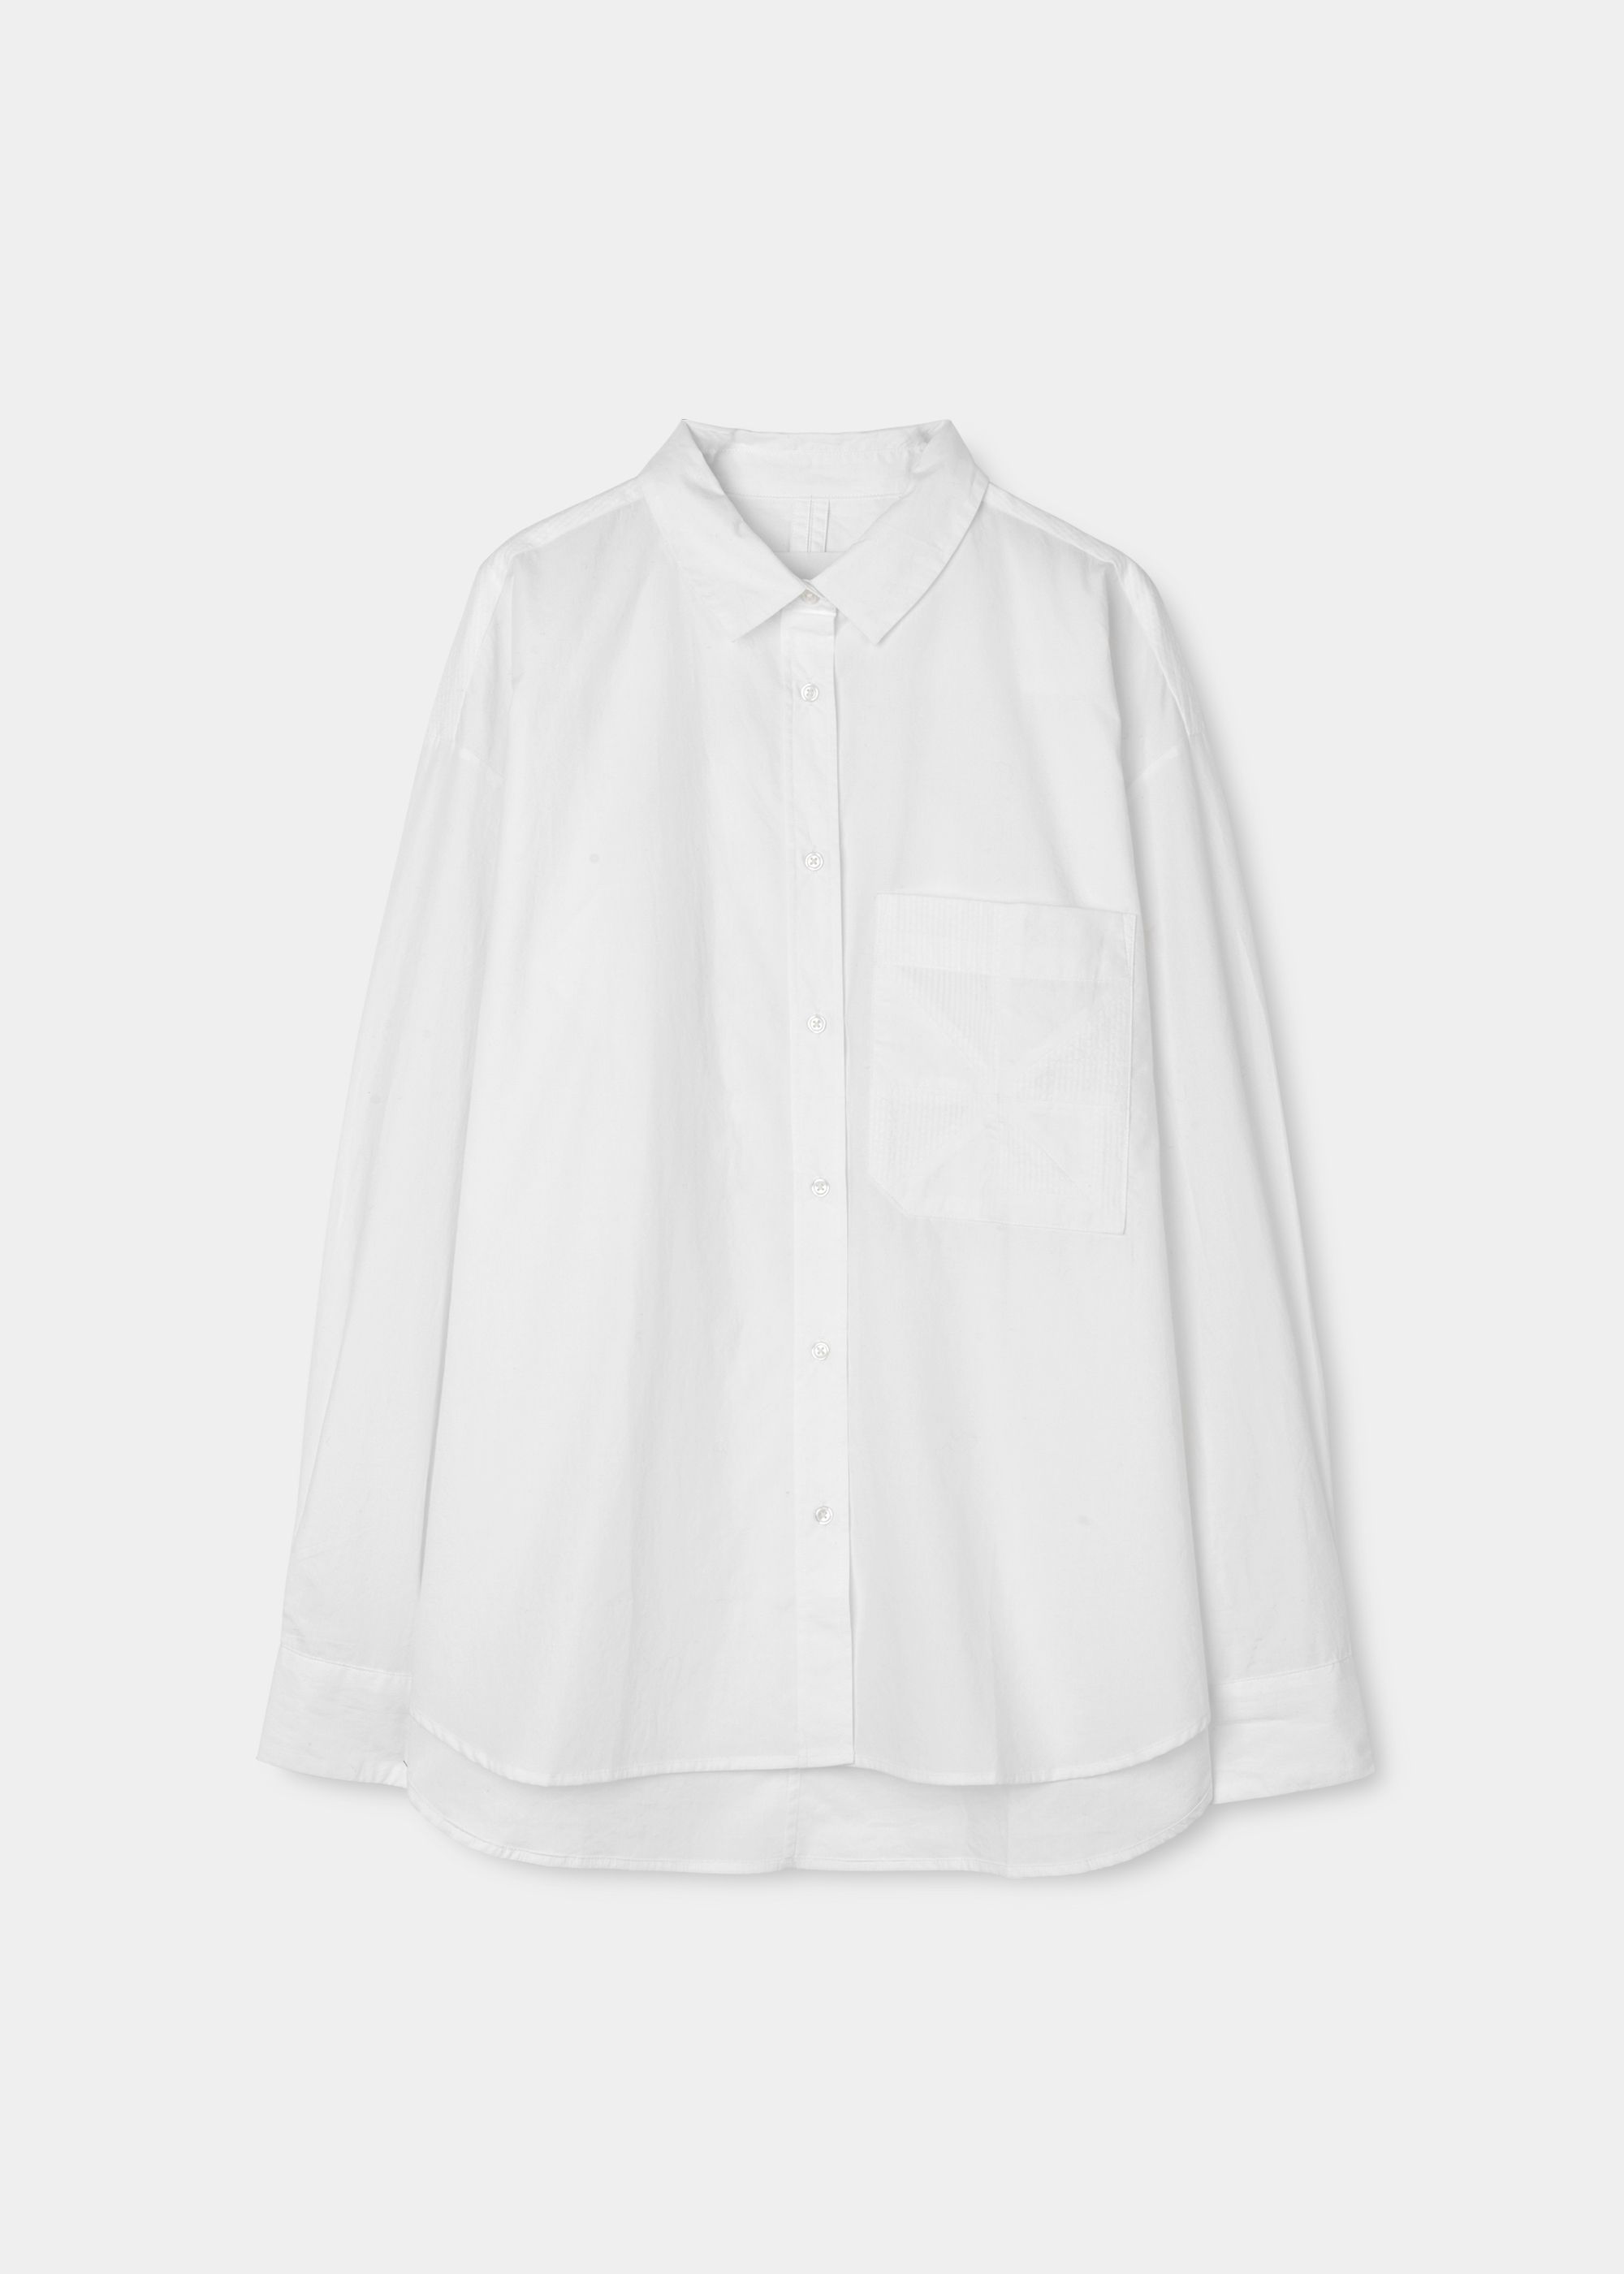 Shirt quilt — Aiayu